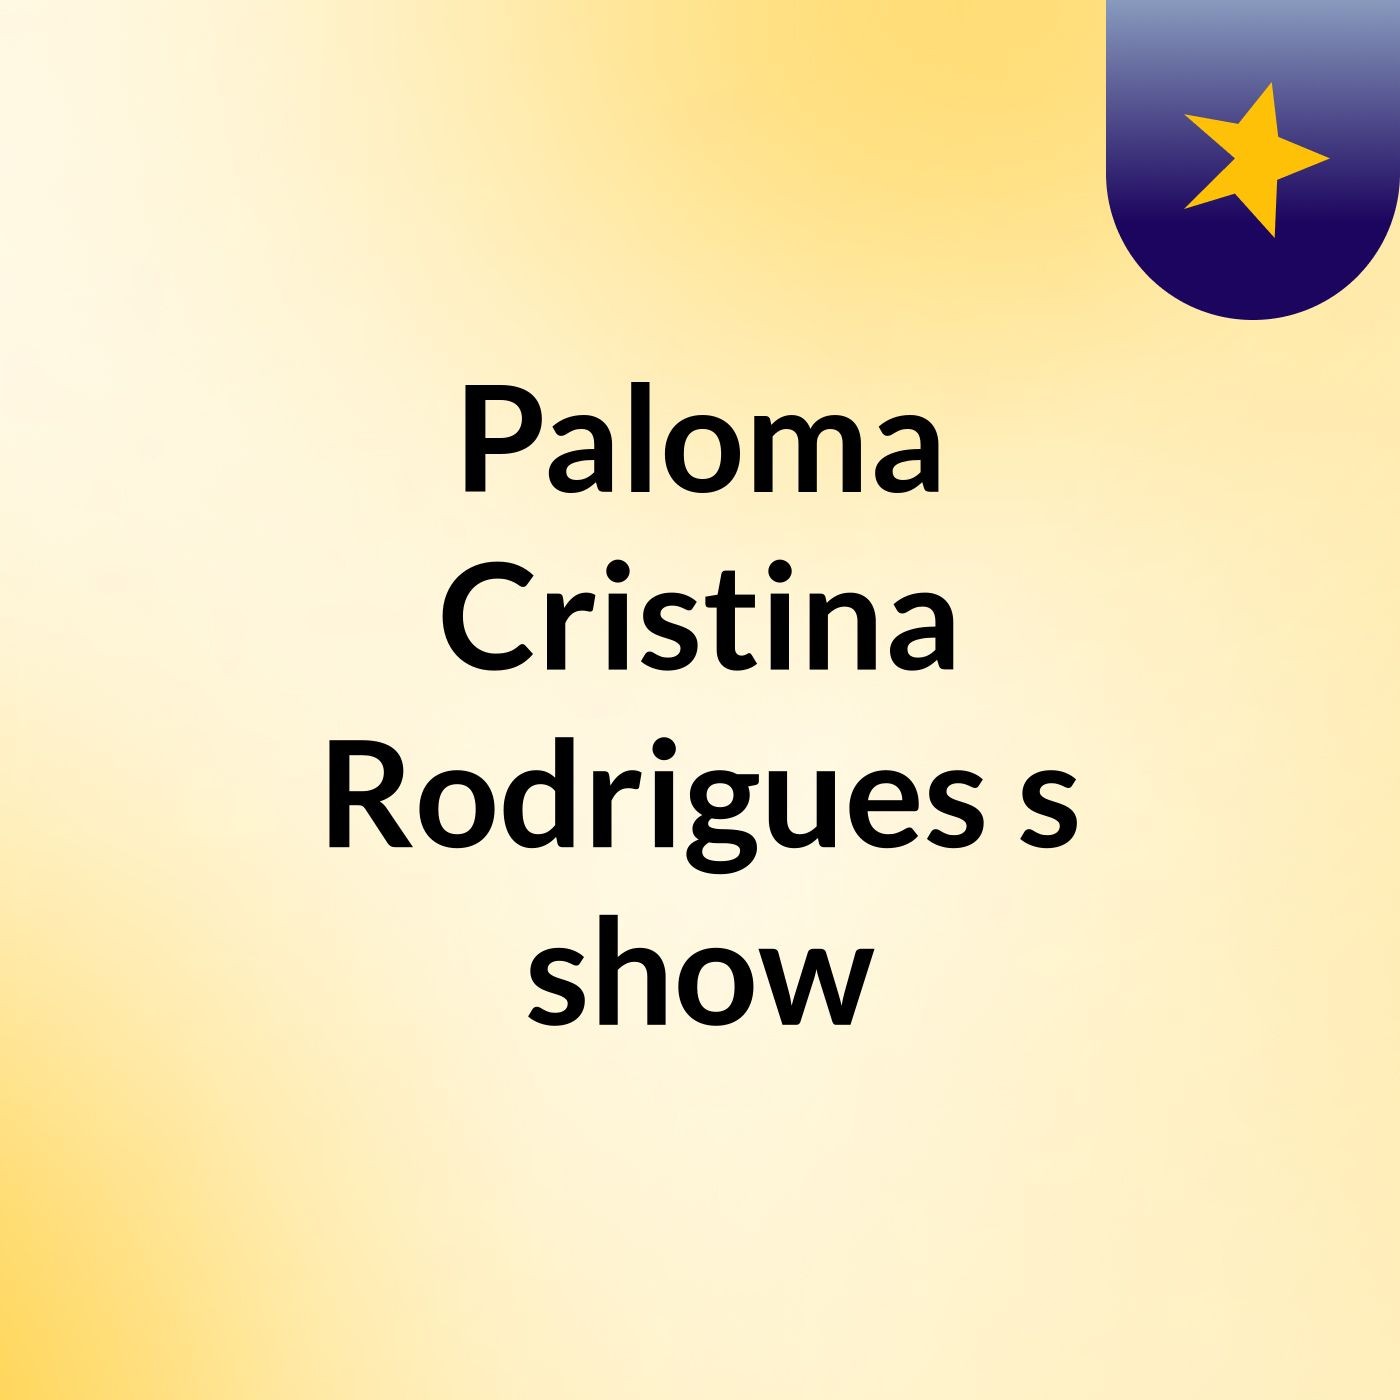 Paloma Cristina Rodrigues's show